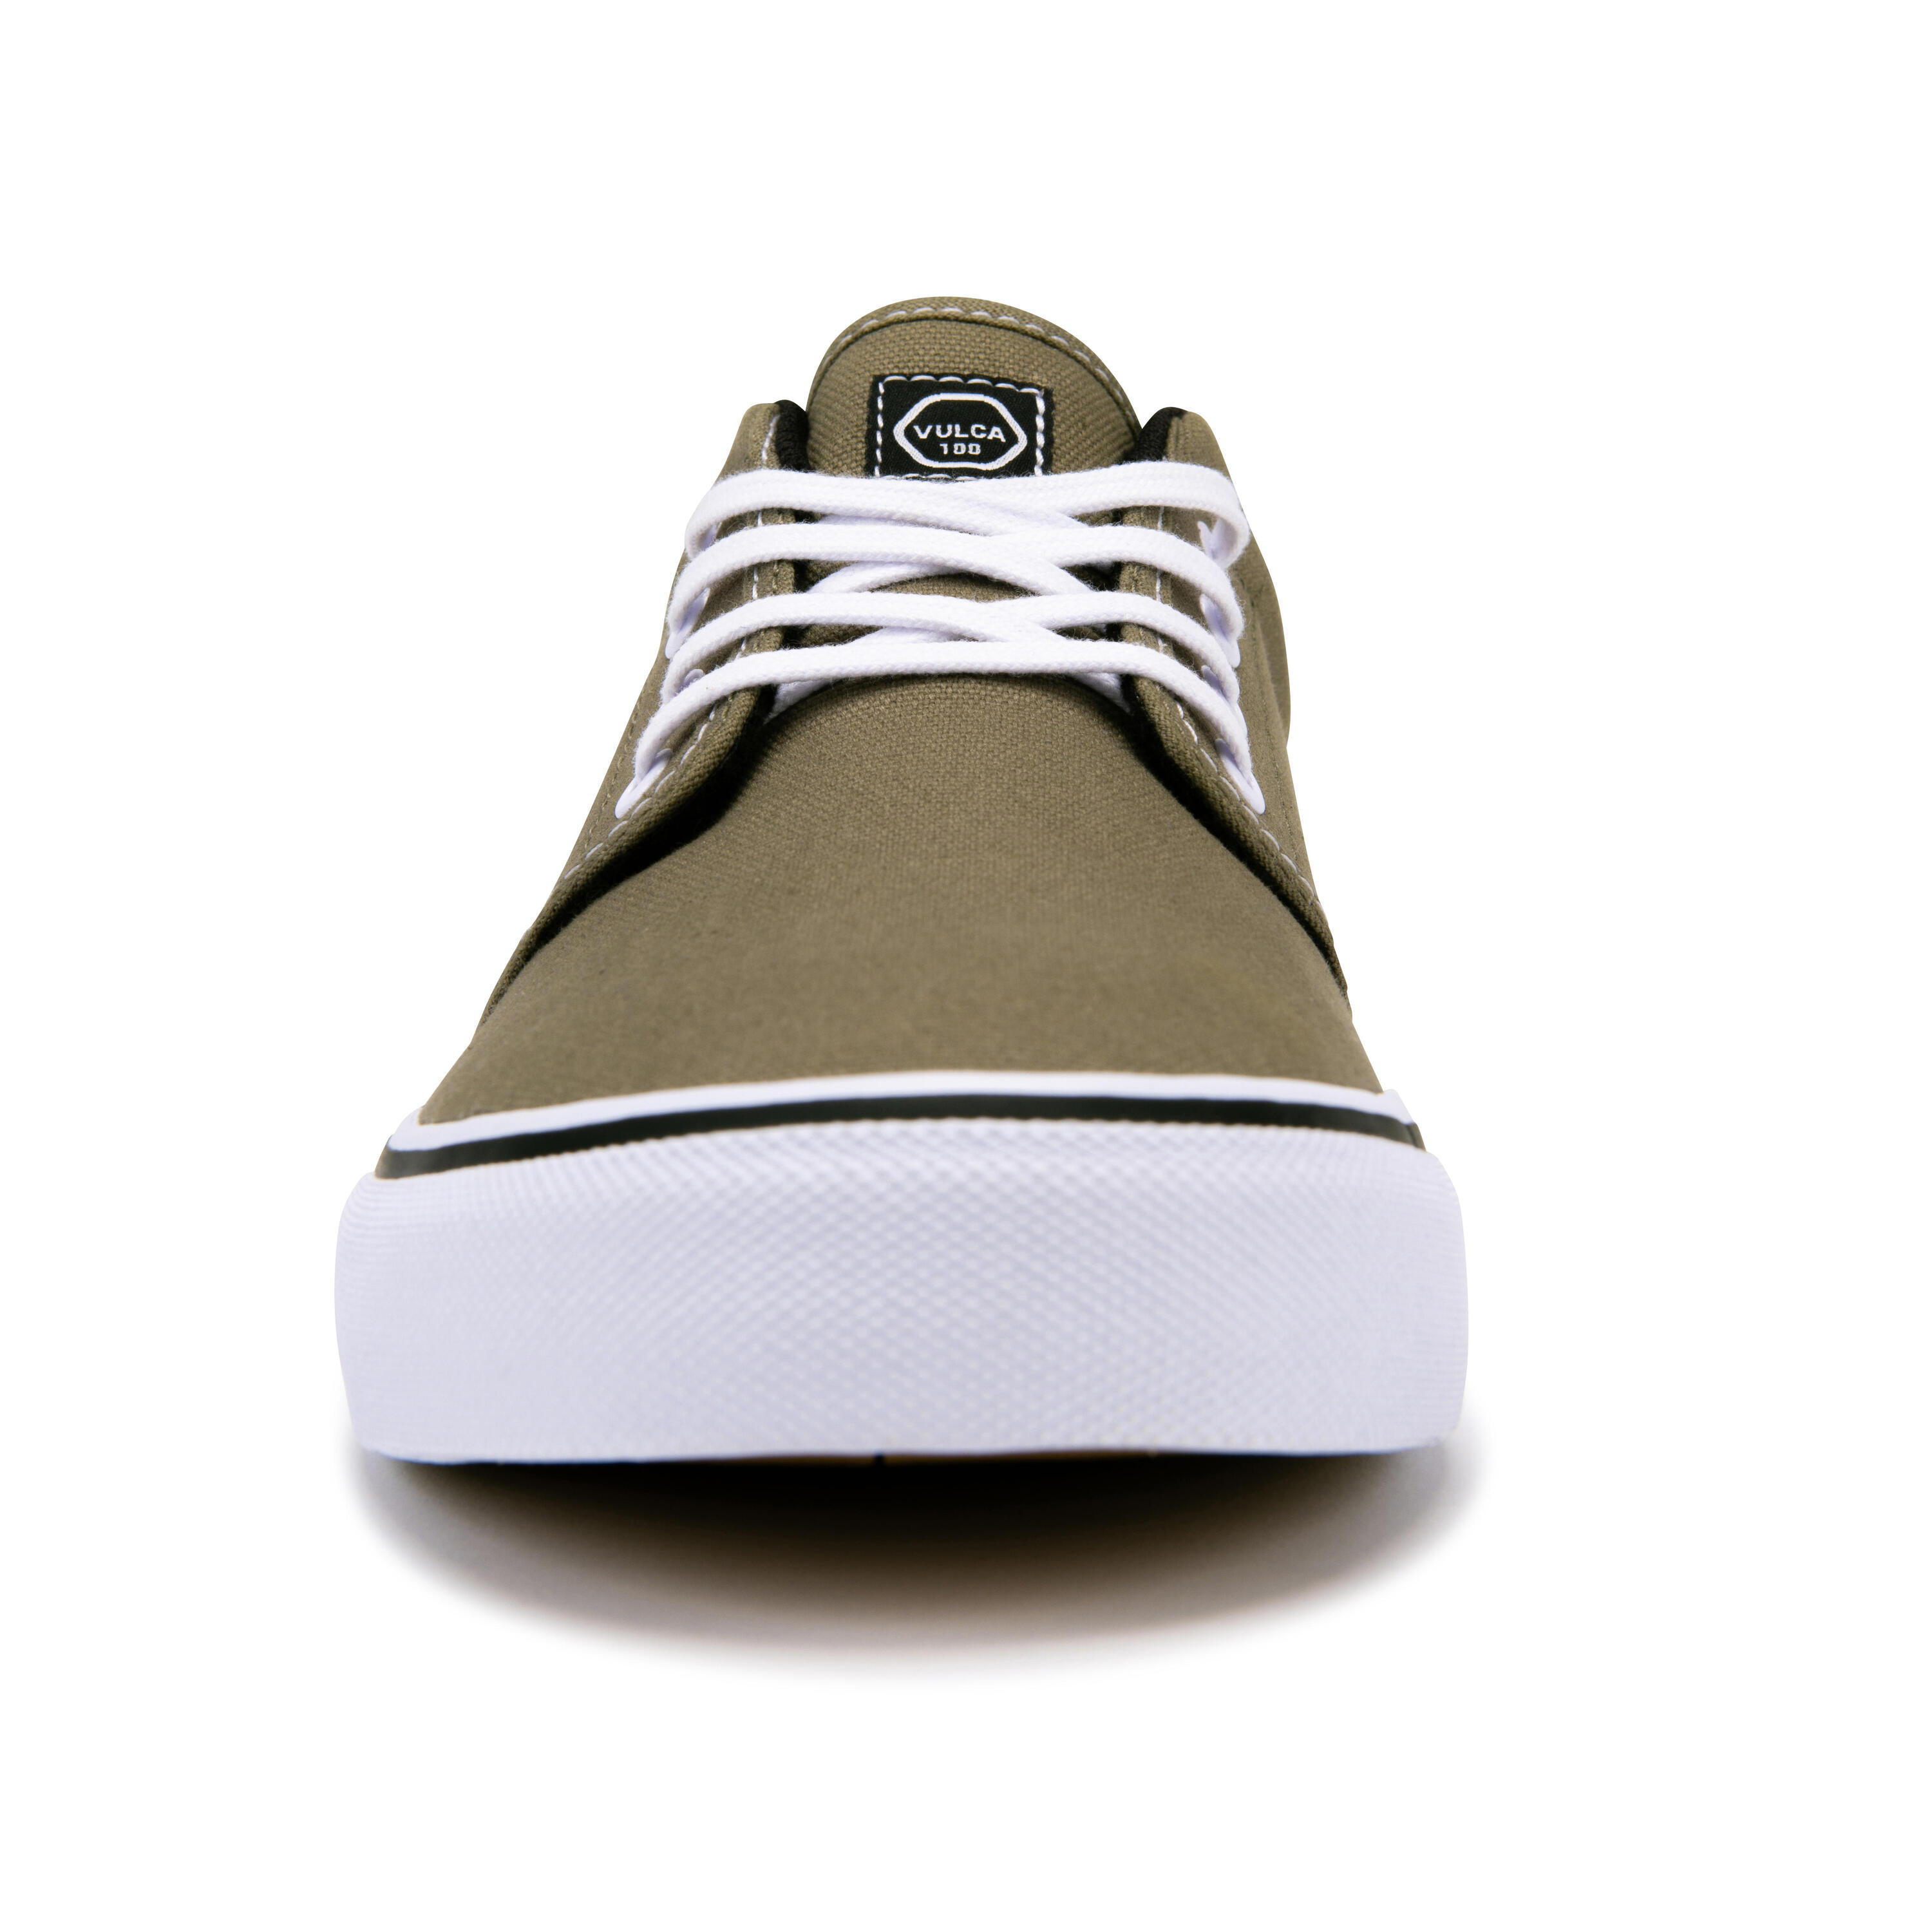 Adult Skateboarding Longboarding Low-Top Shoes Vulca 100 - Khaki/White 4/15